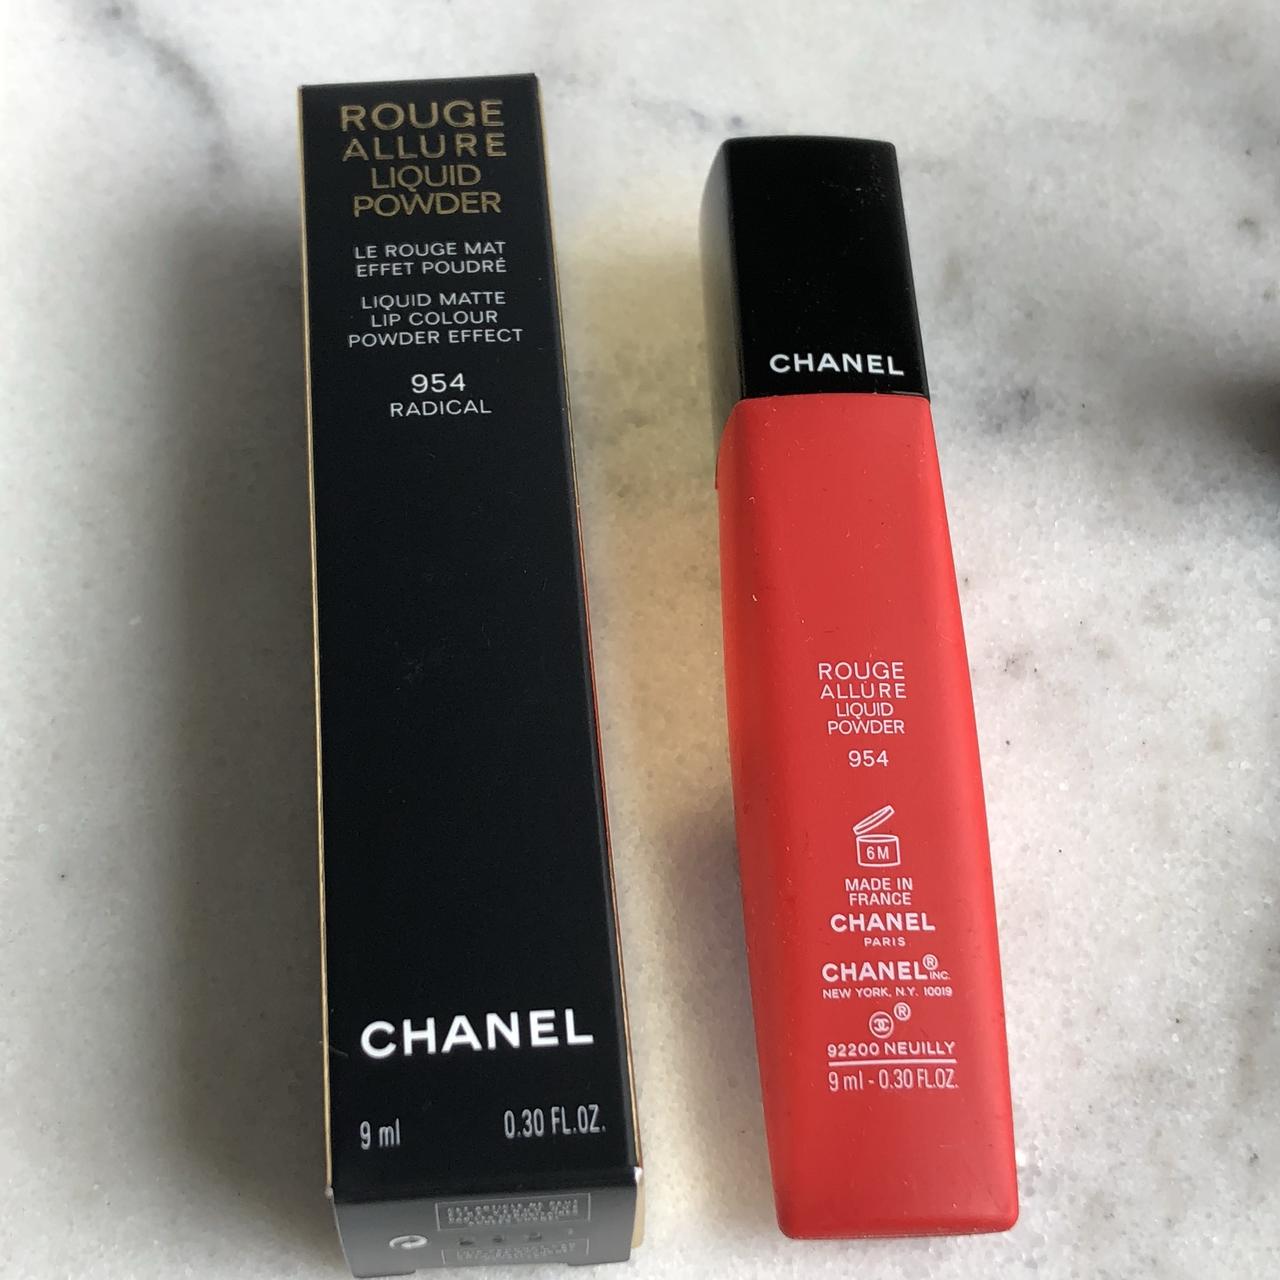 Chanel rouge allure liquid powder 954 “Radical”